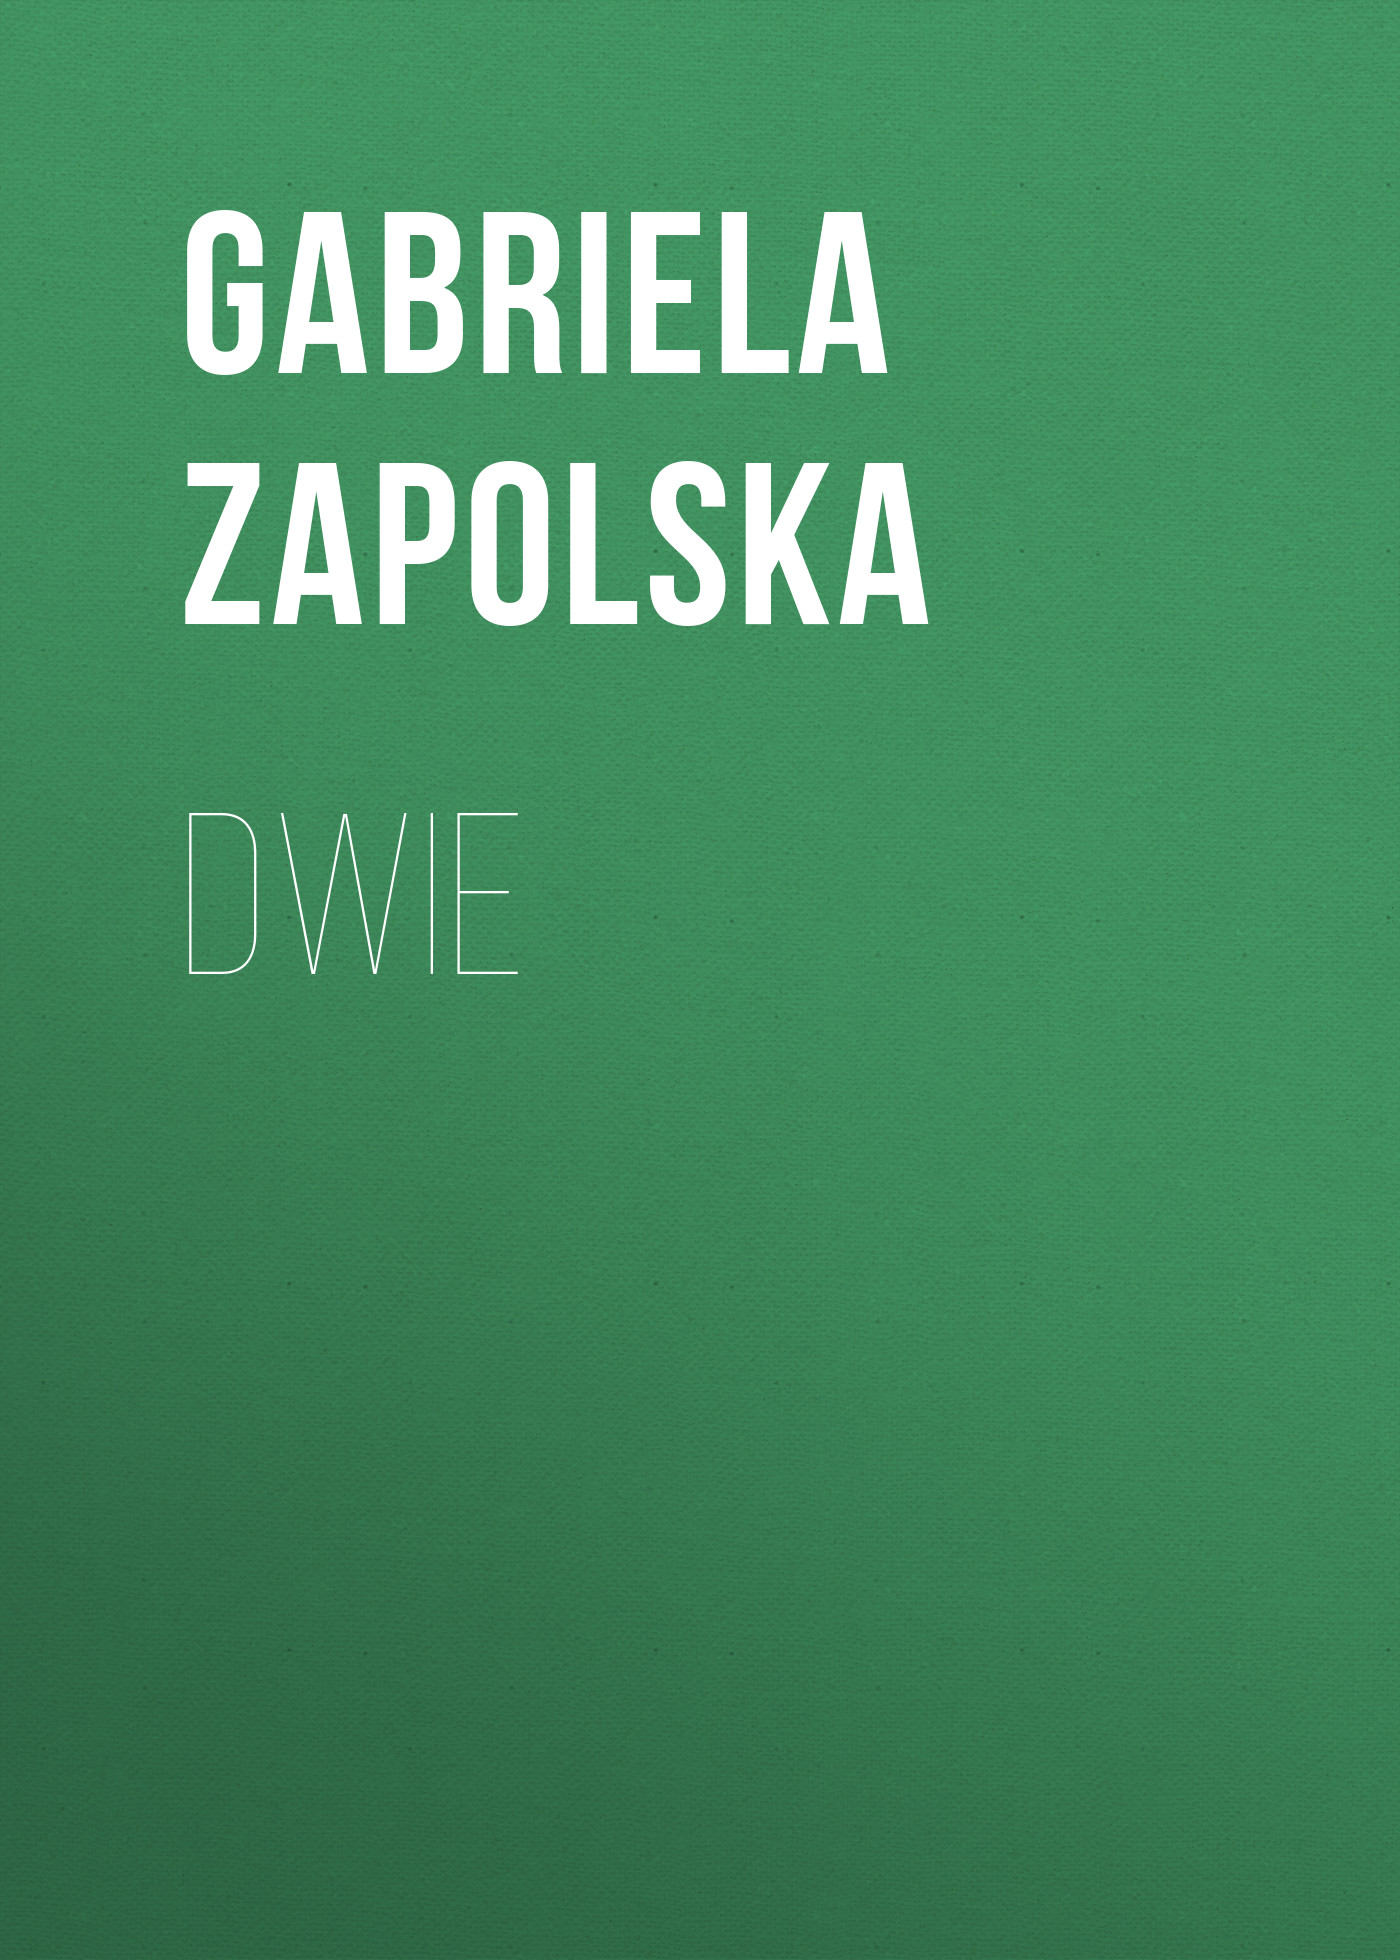 Скачать Dwie - Gabriela Zapolska